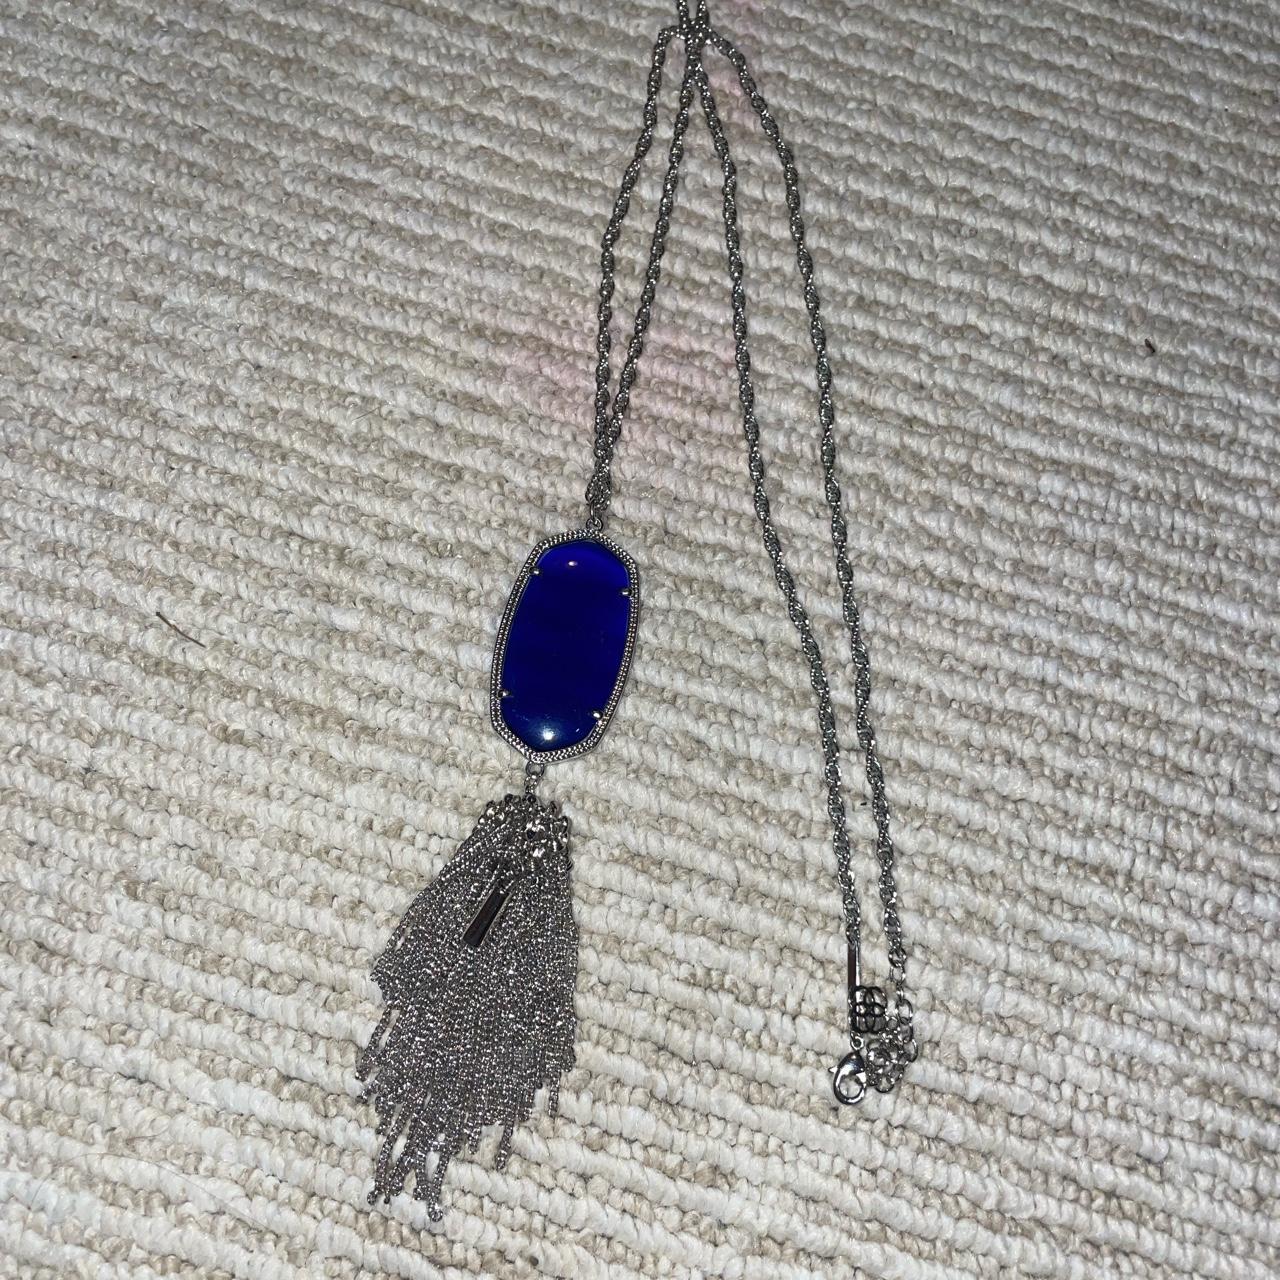 KS Elisa Necklace in Royal Blue Kyocera Opal | Kendra scott necklace,  Necklace, Cute jewelry